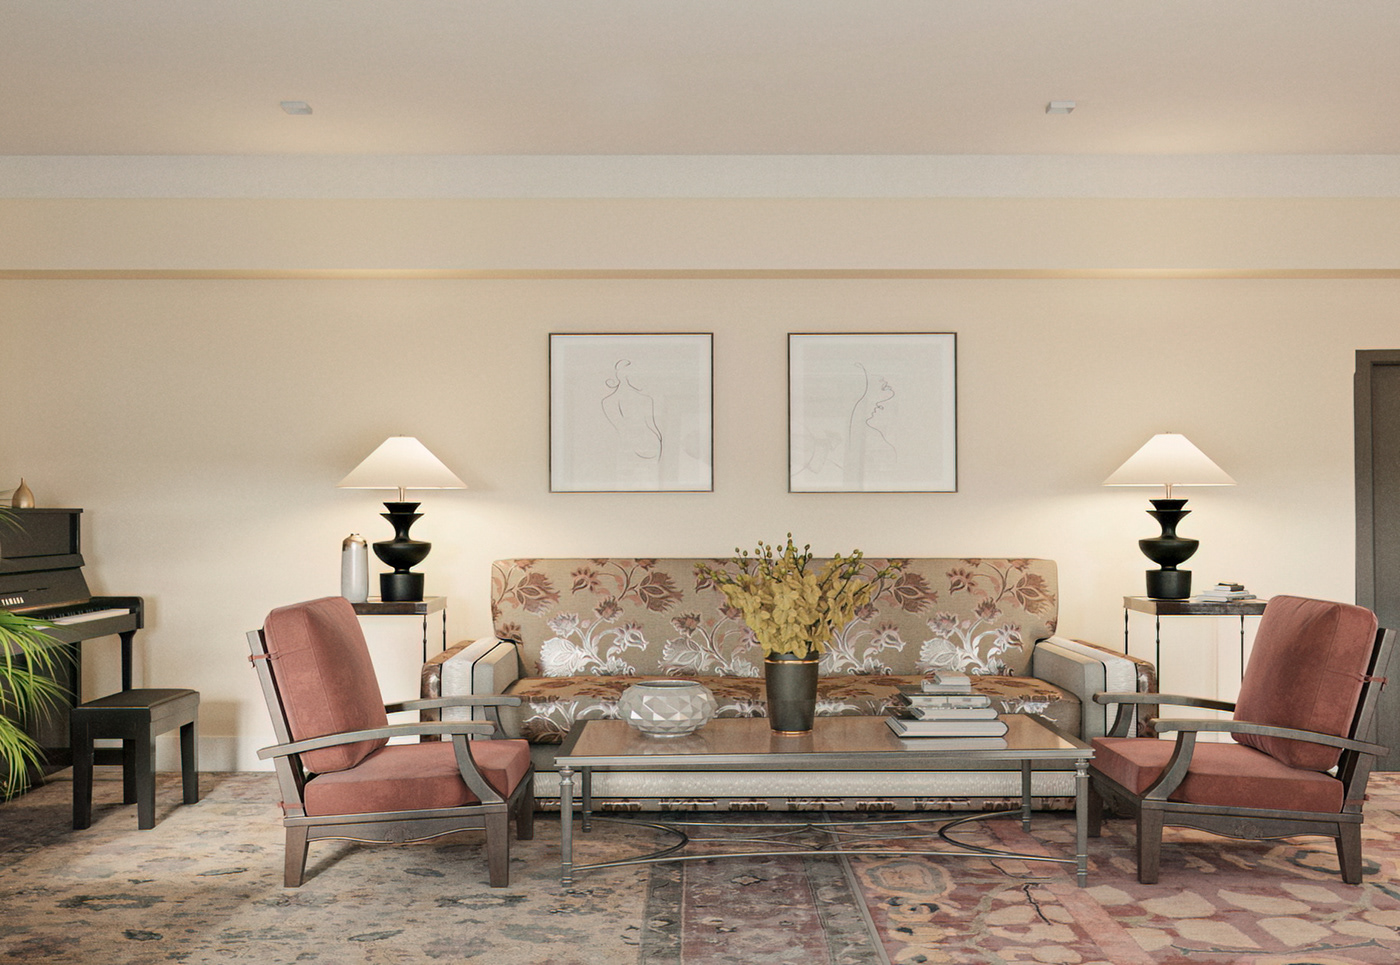 Piano eclectic Interior design living room modern american vintage Retro